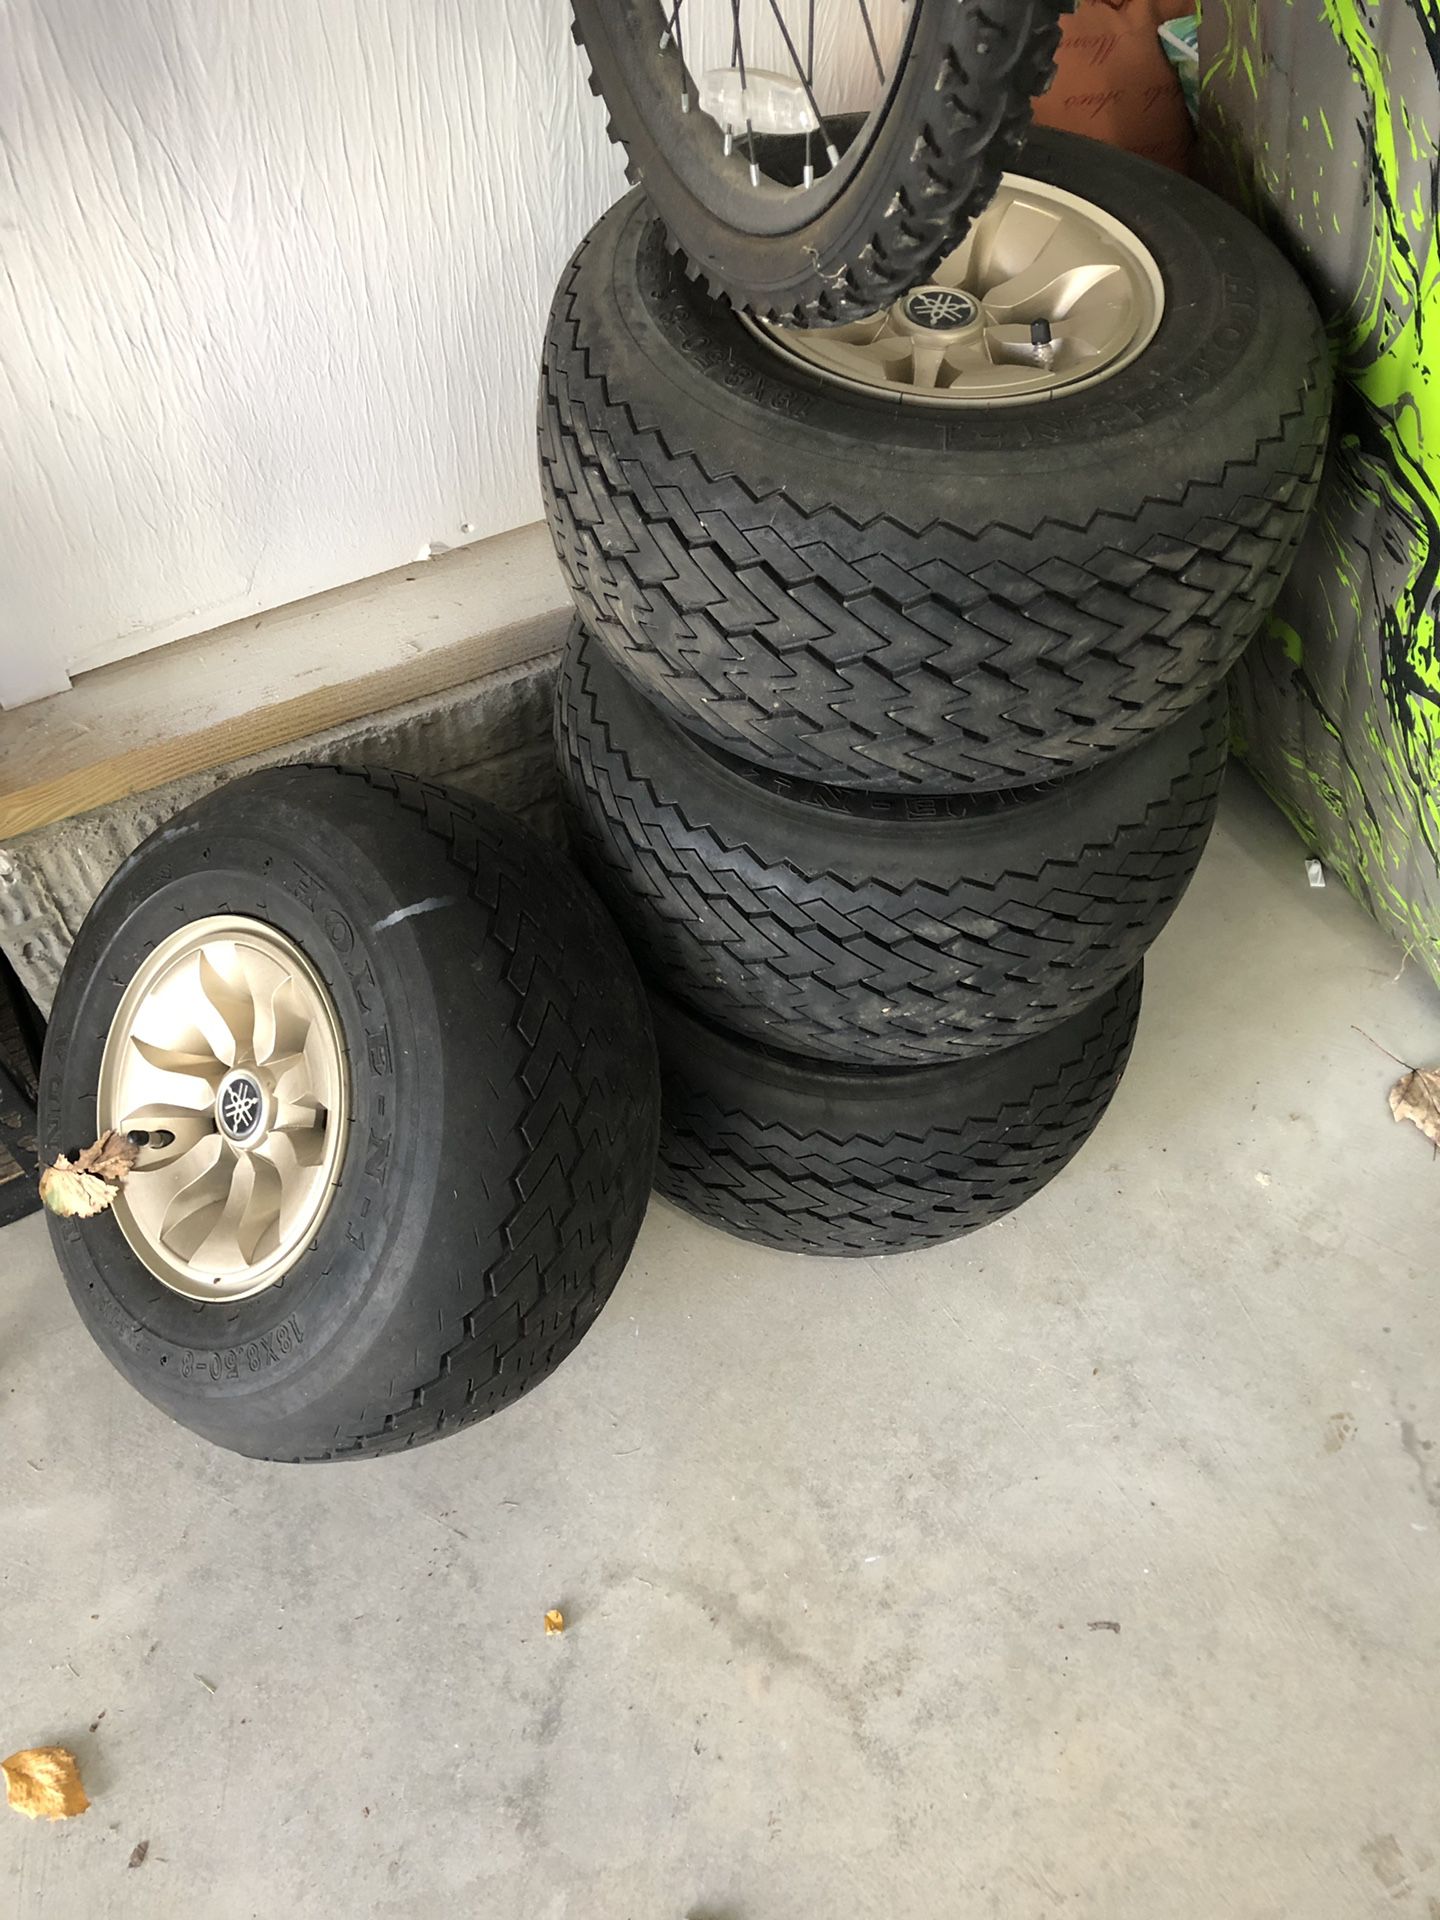 Golf cart Tires and hub caps